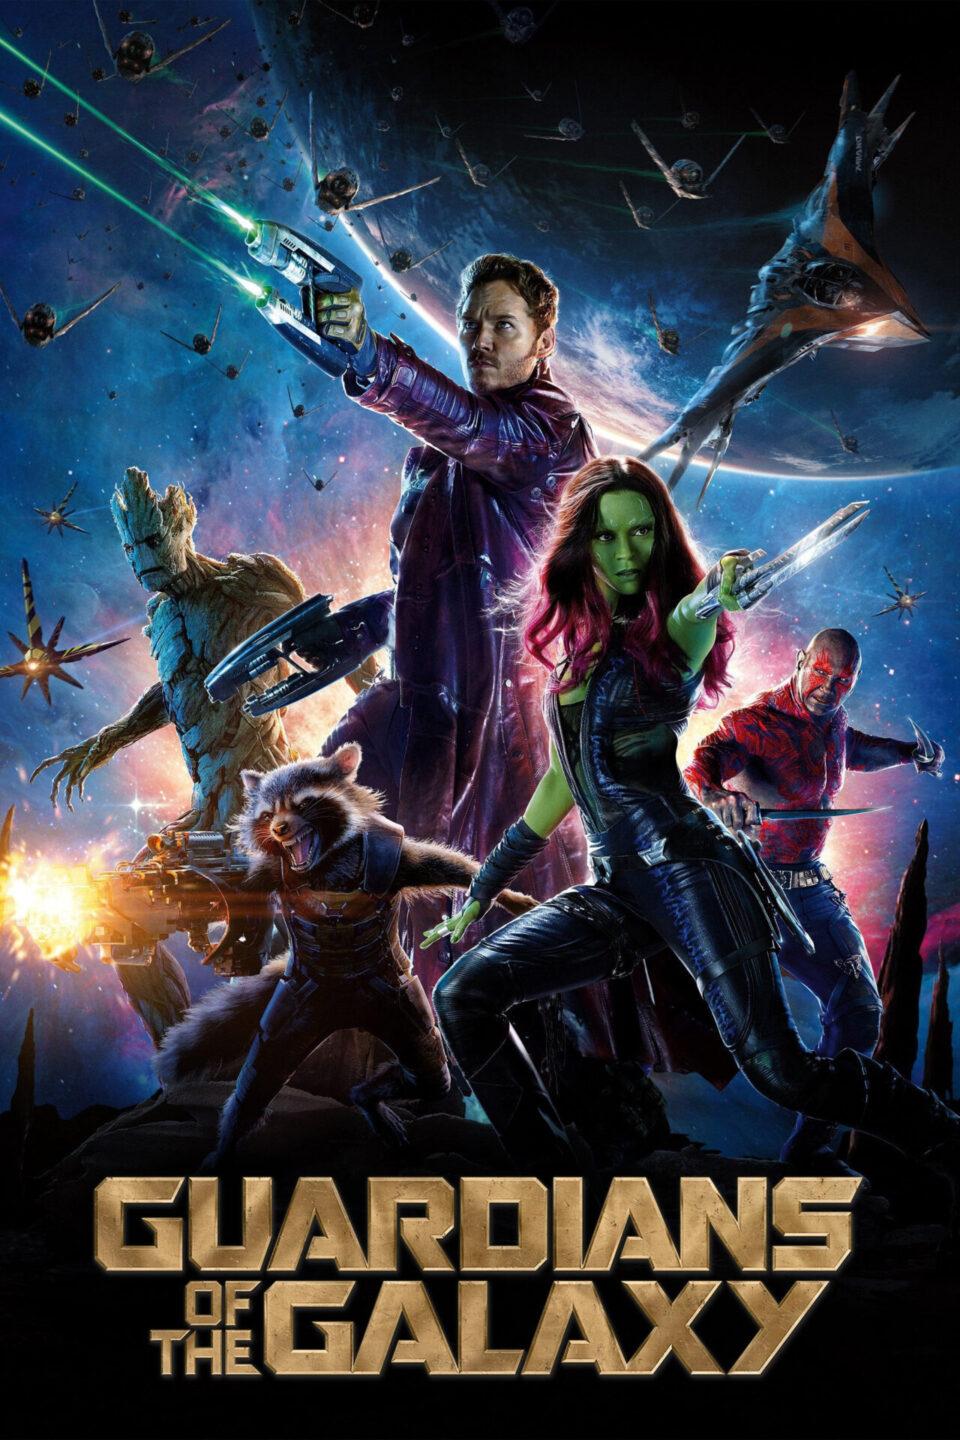 James Gunn's Guardians of the Galaxy